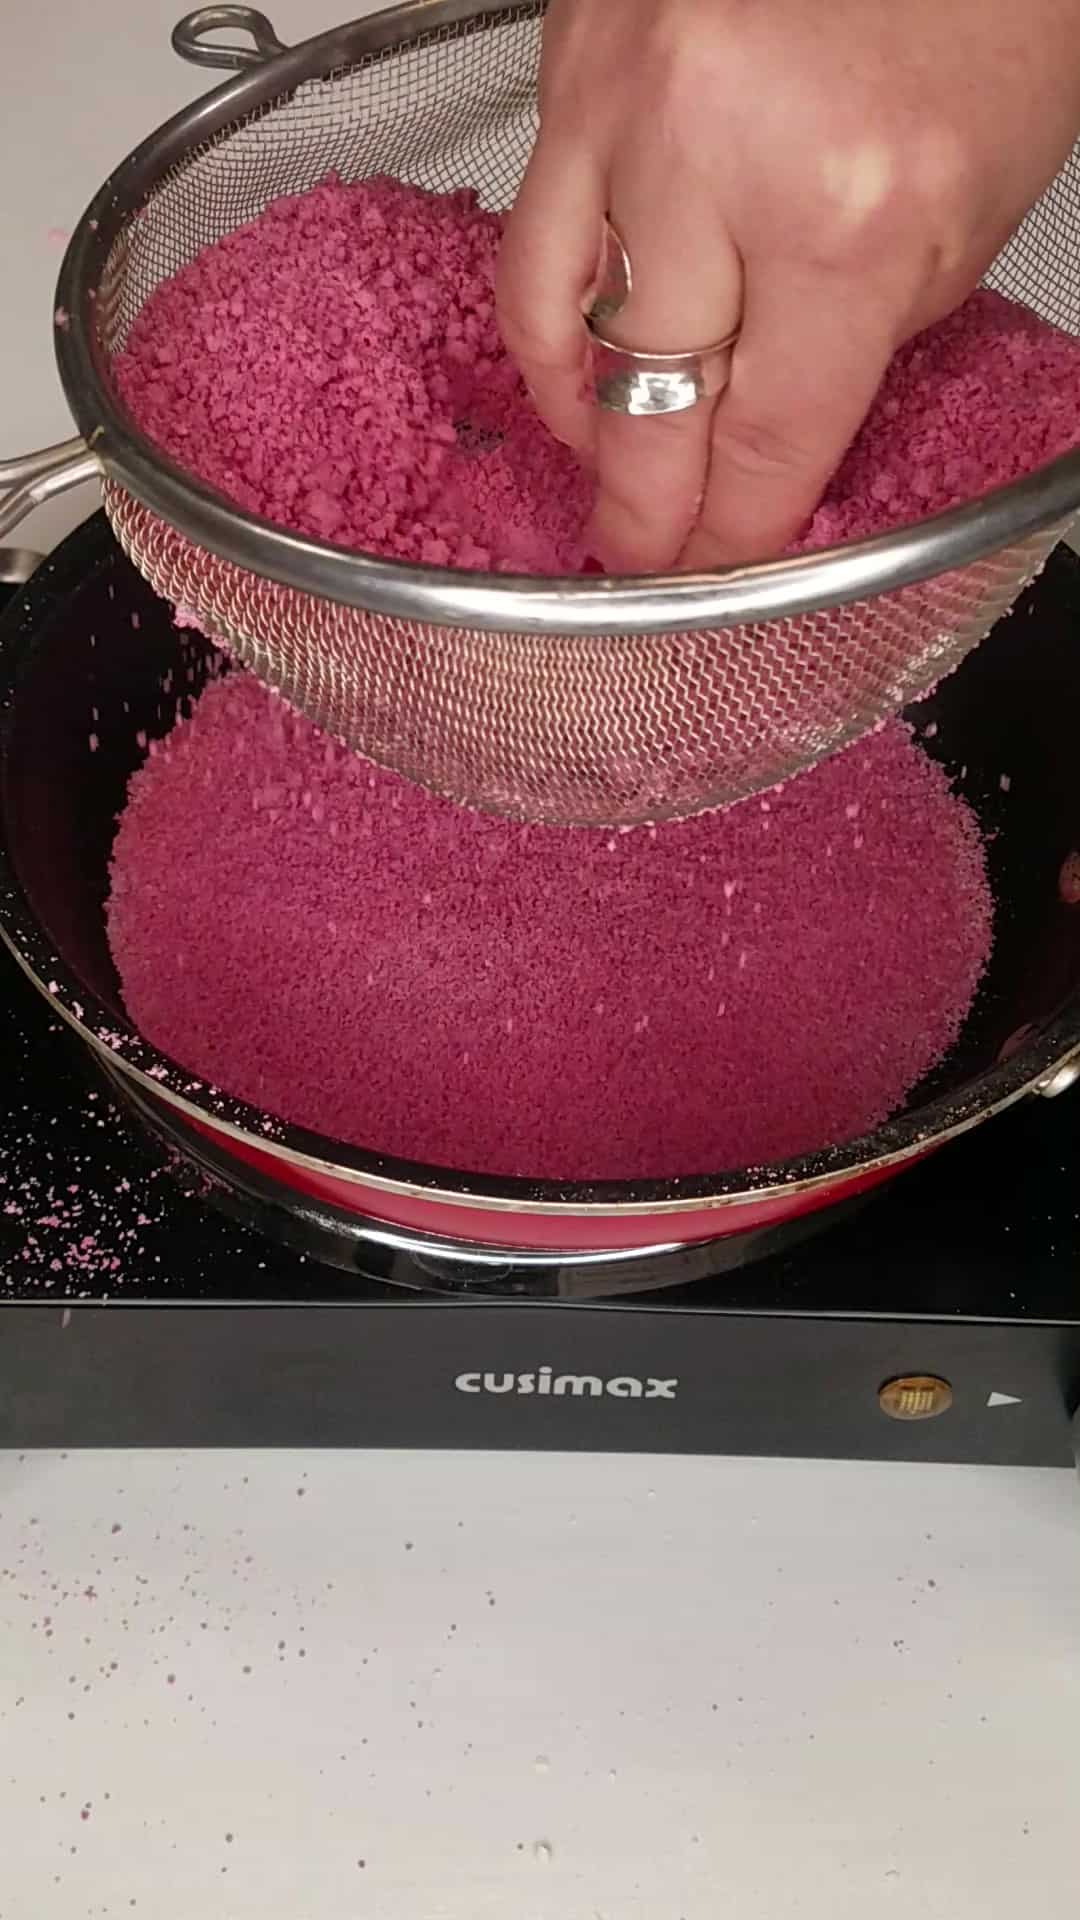 Sieving the tapioca flour mixture onto a hot skillet.